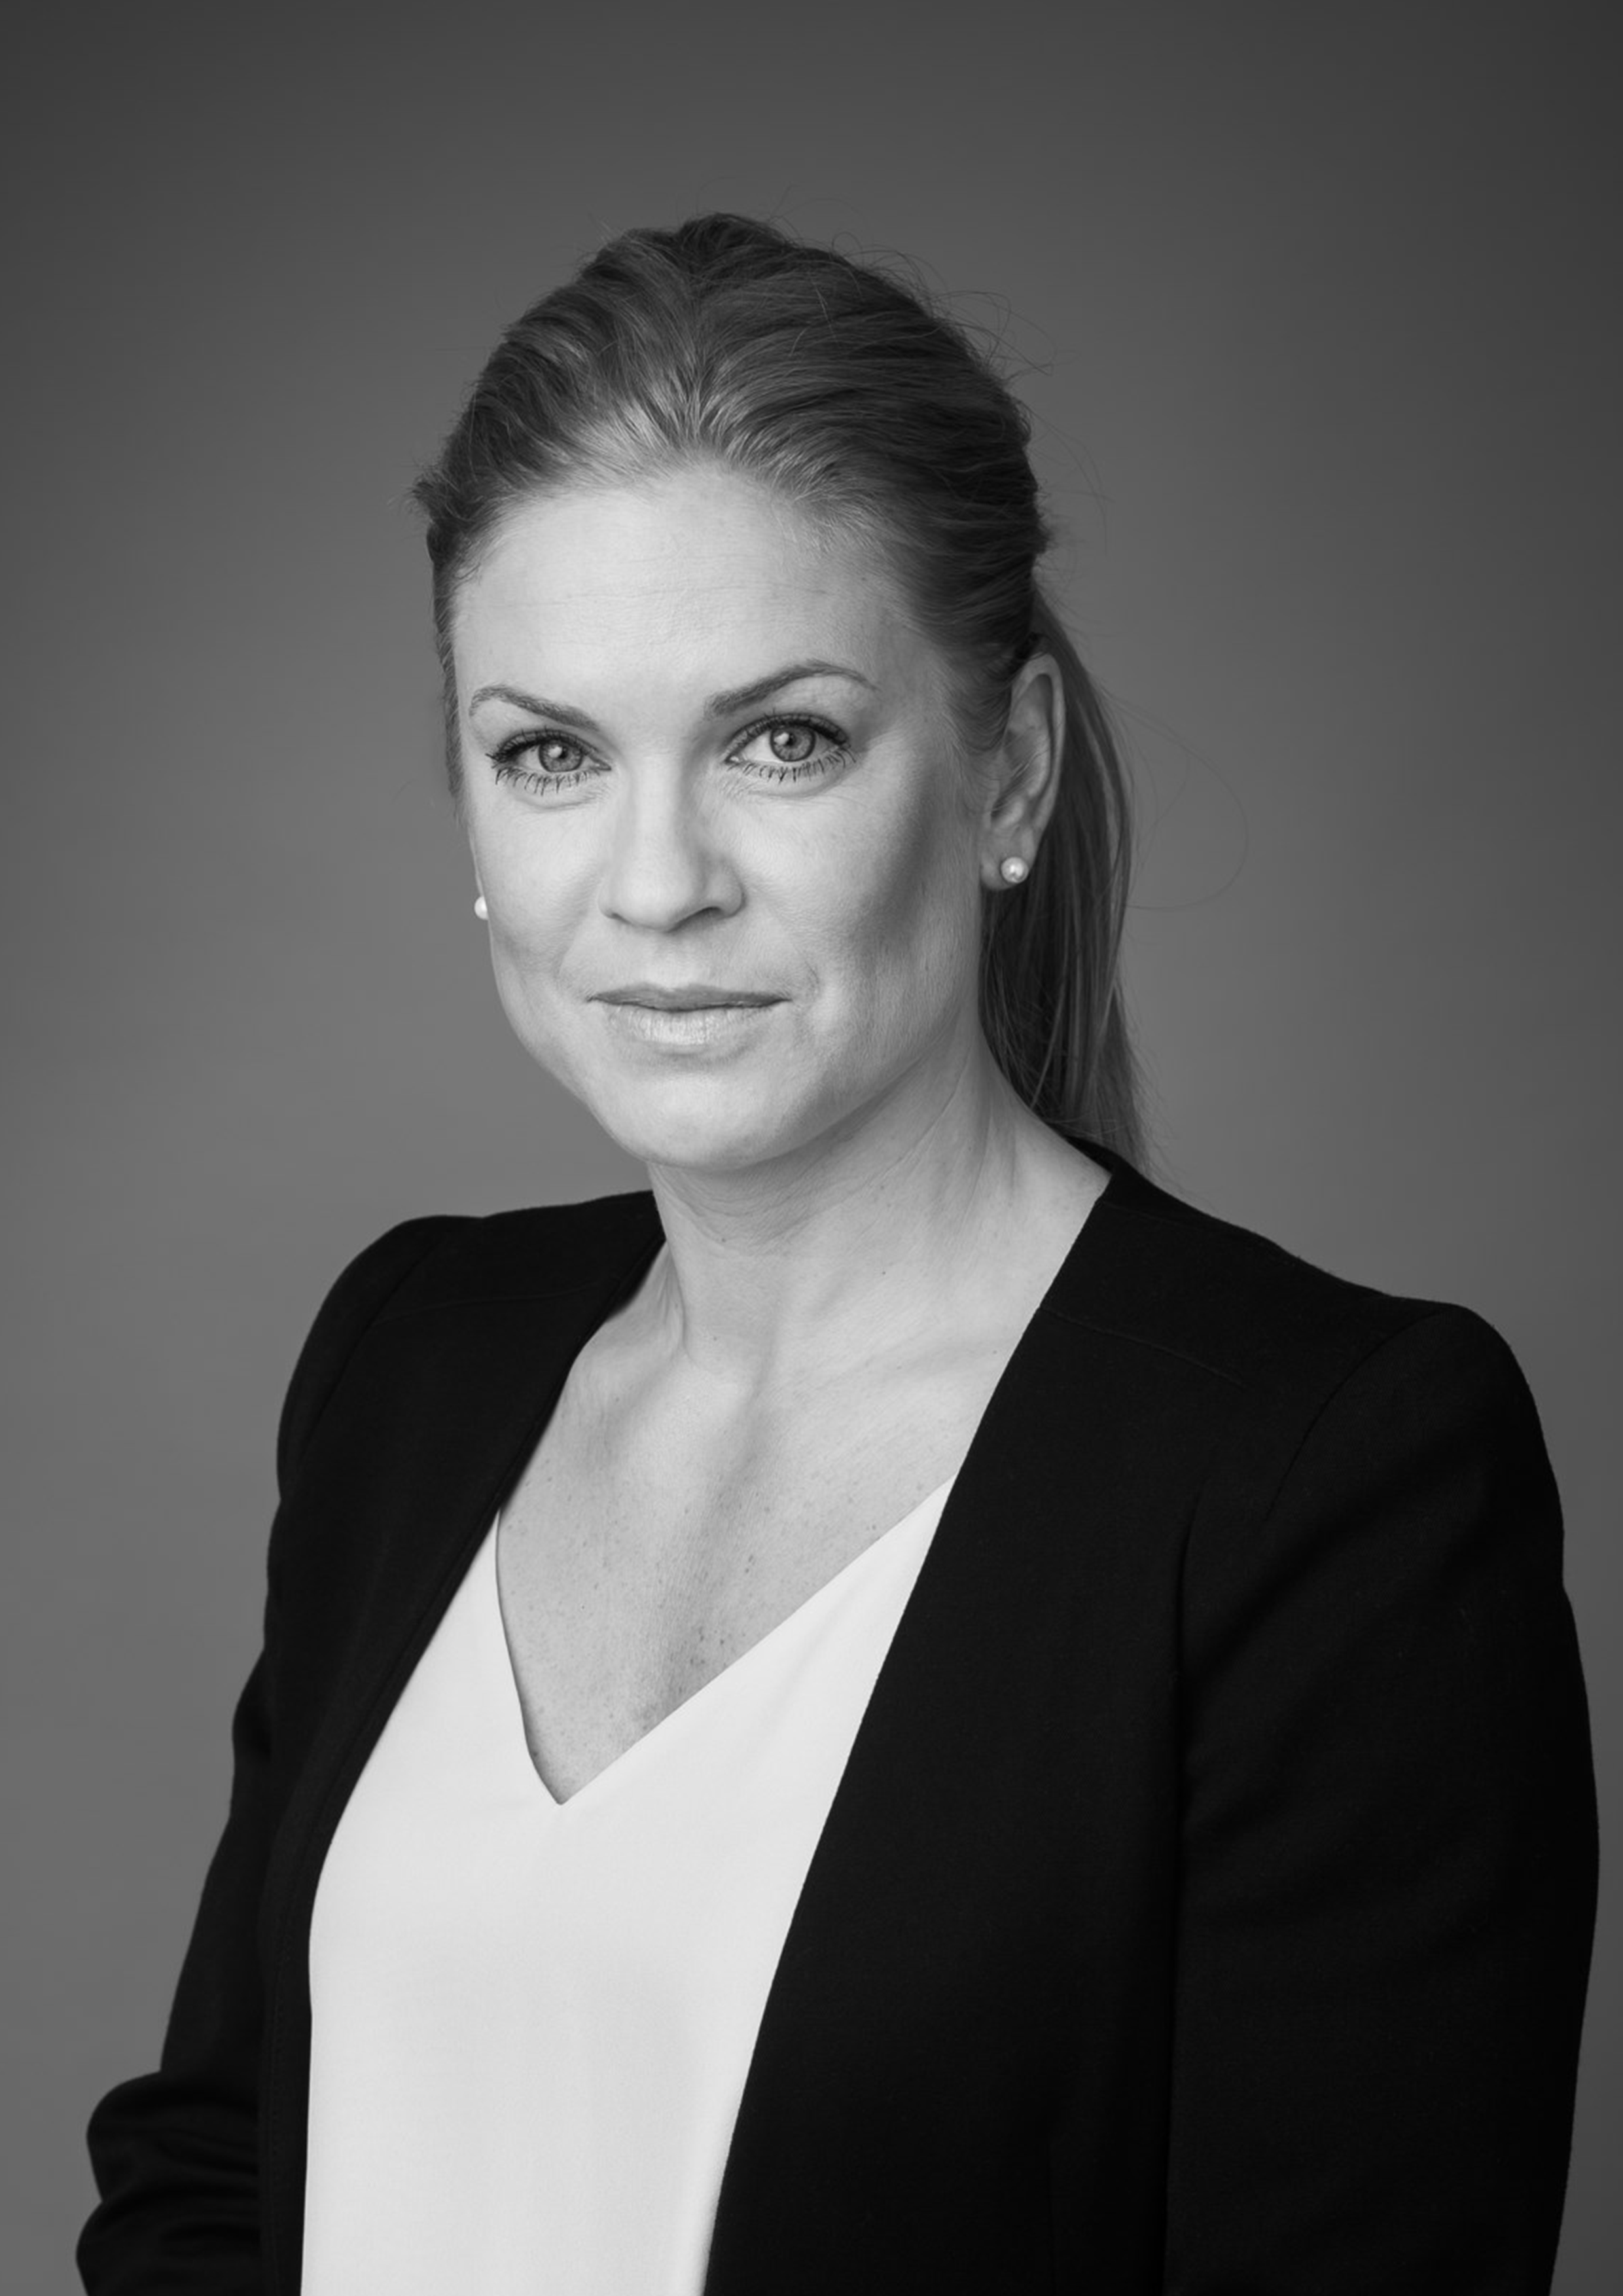 Madeleine Thorén